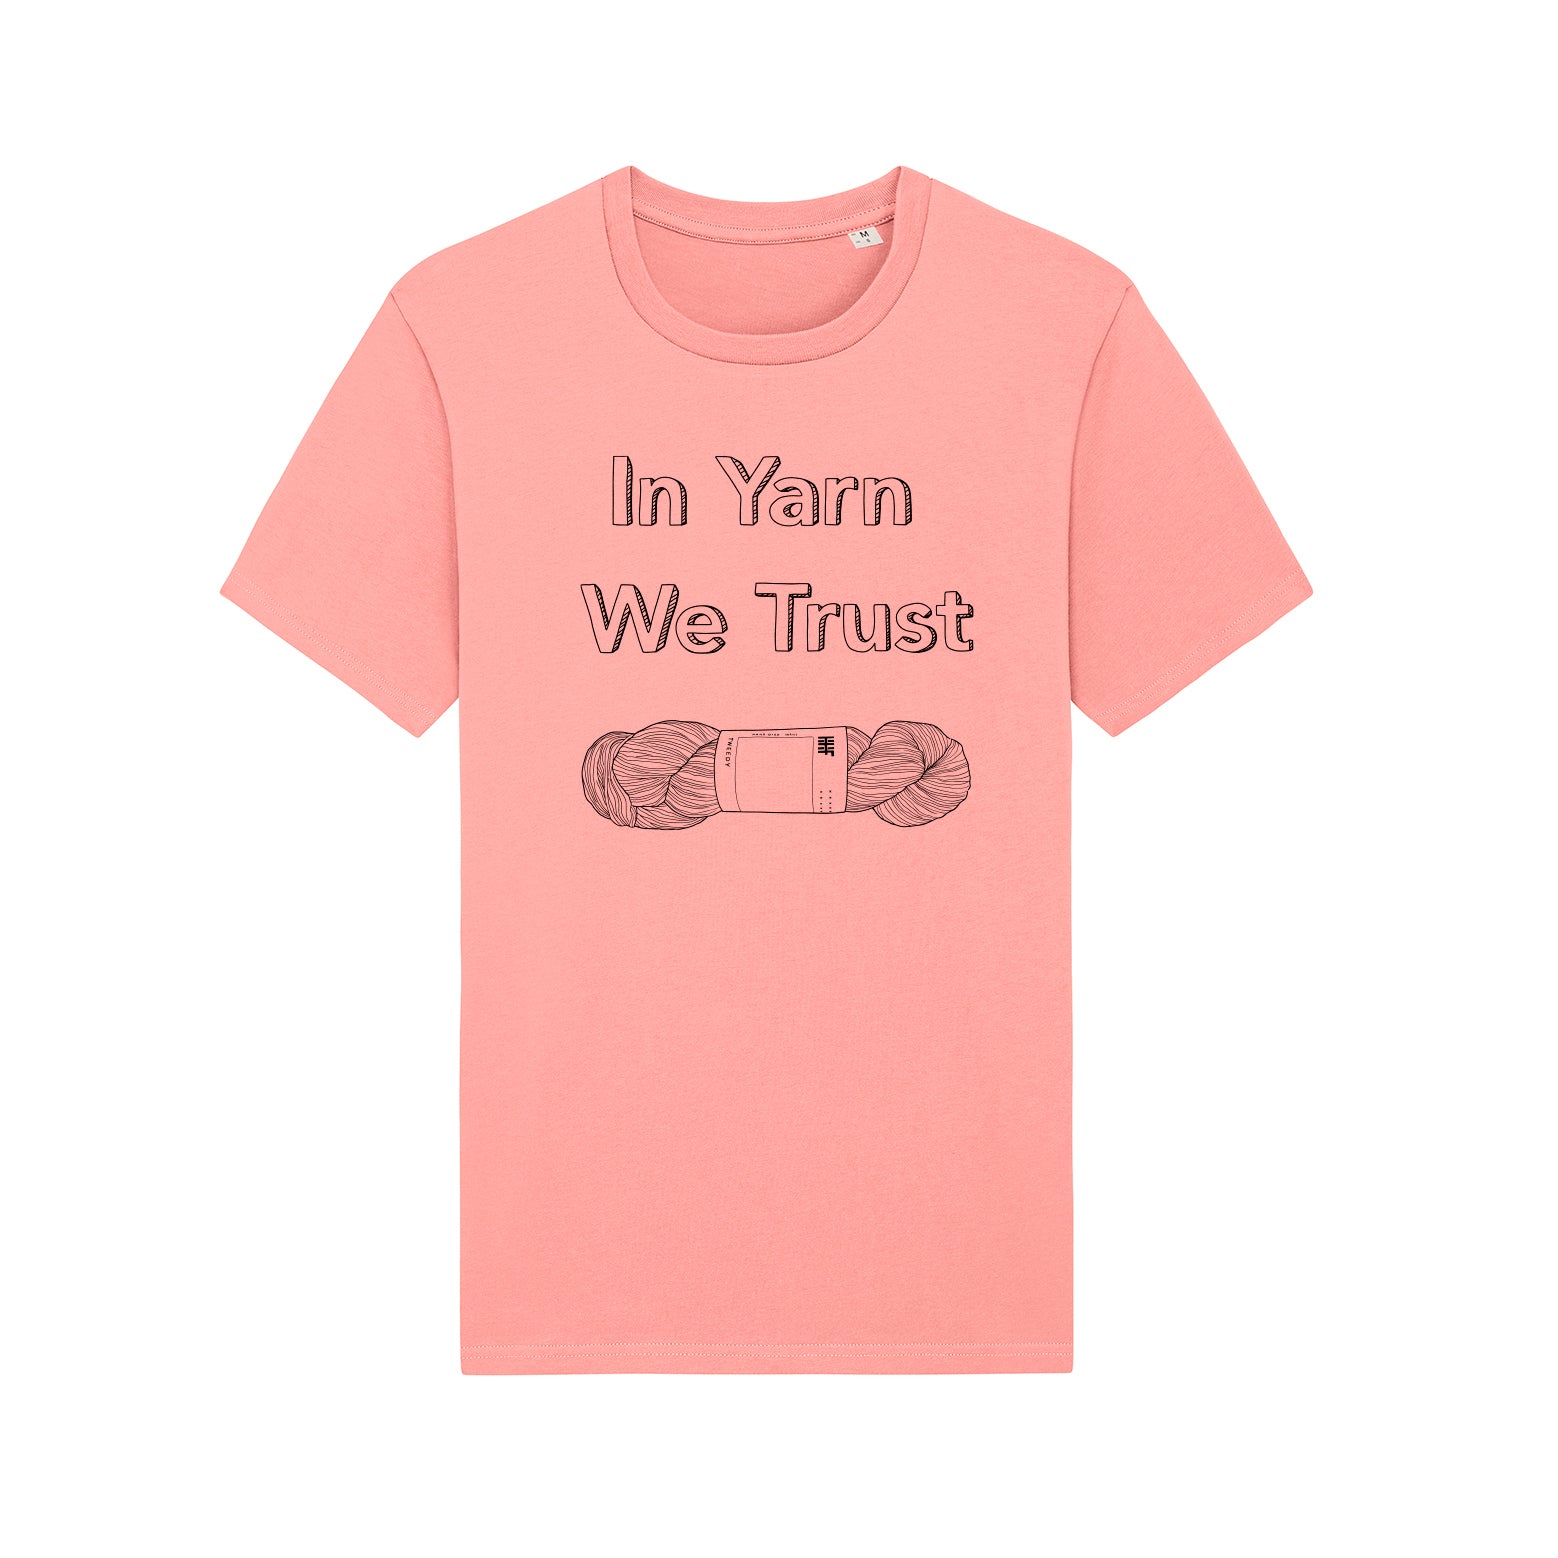 In Yarn We Trust T-shirt, Pink